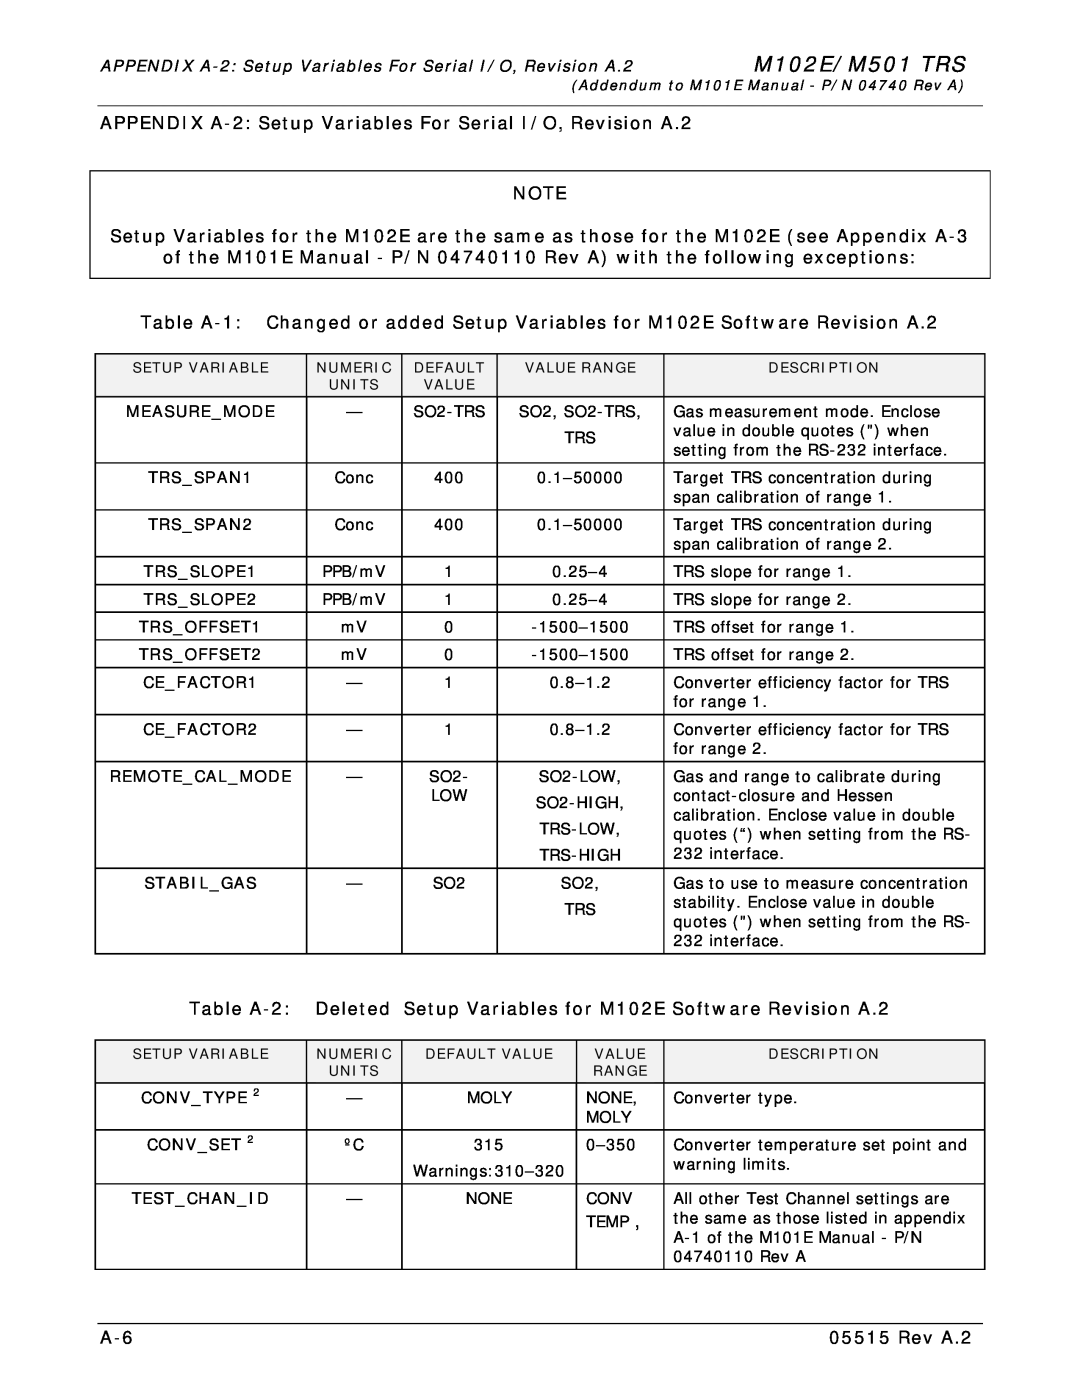 Teledyne 102E manual APPENDIX A-2 Setup Variables For Serial I/O, Revision A.2, Table A-2, Rev A.2, Measuremode, Stabilgas 